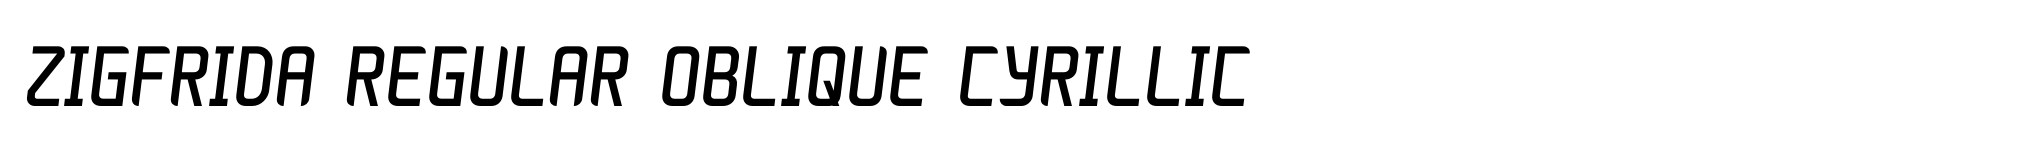 Zigfrida Regular Oblique Cyrillic image